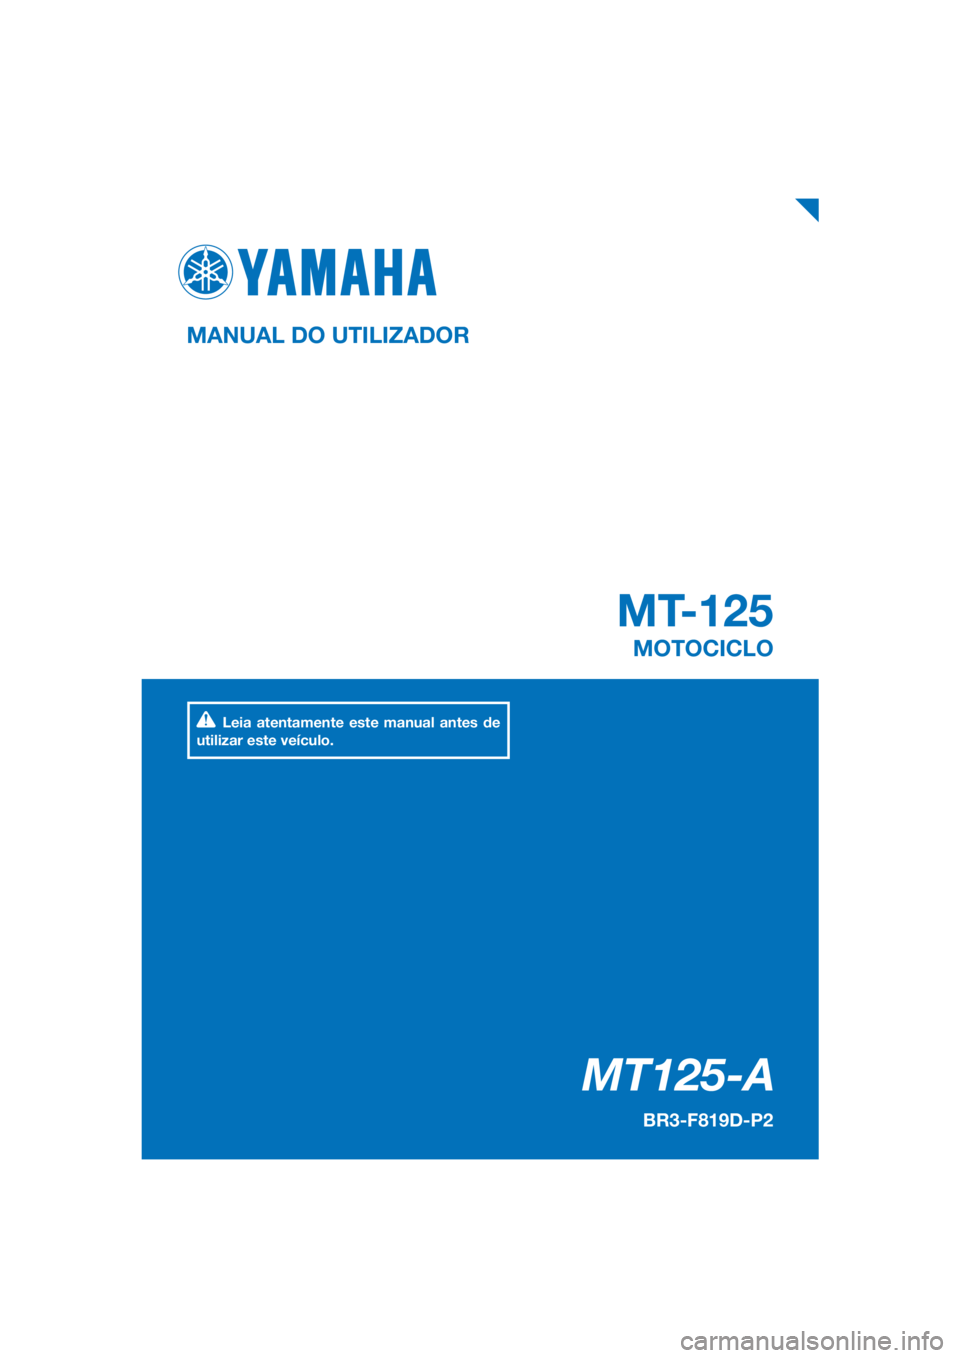 YAMAHA MT-125 2017  Manual de utilização (in Portuguese) PANTONE285C
MT125-A
MT-125
MANUAL DO UTILIZADOR
BR3-F819D-P2
MOTOCICLO
Leia atentamente este manual antes de 
utilizar este veículo.
[Portuguese  (P)] 